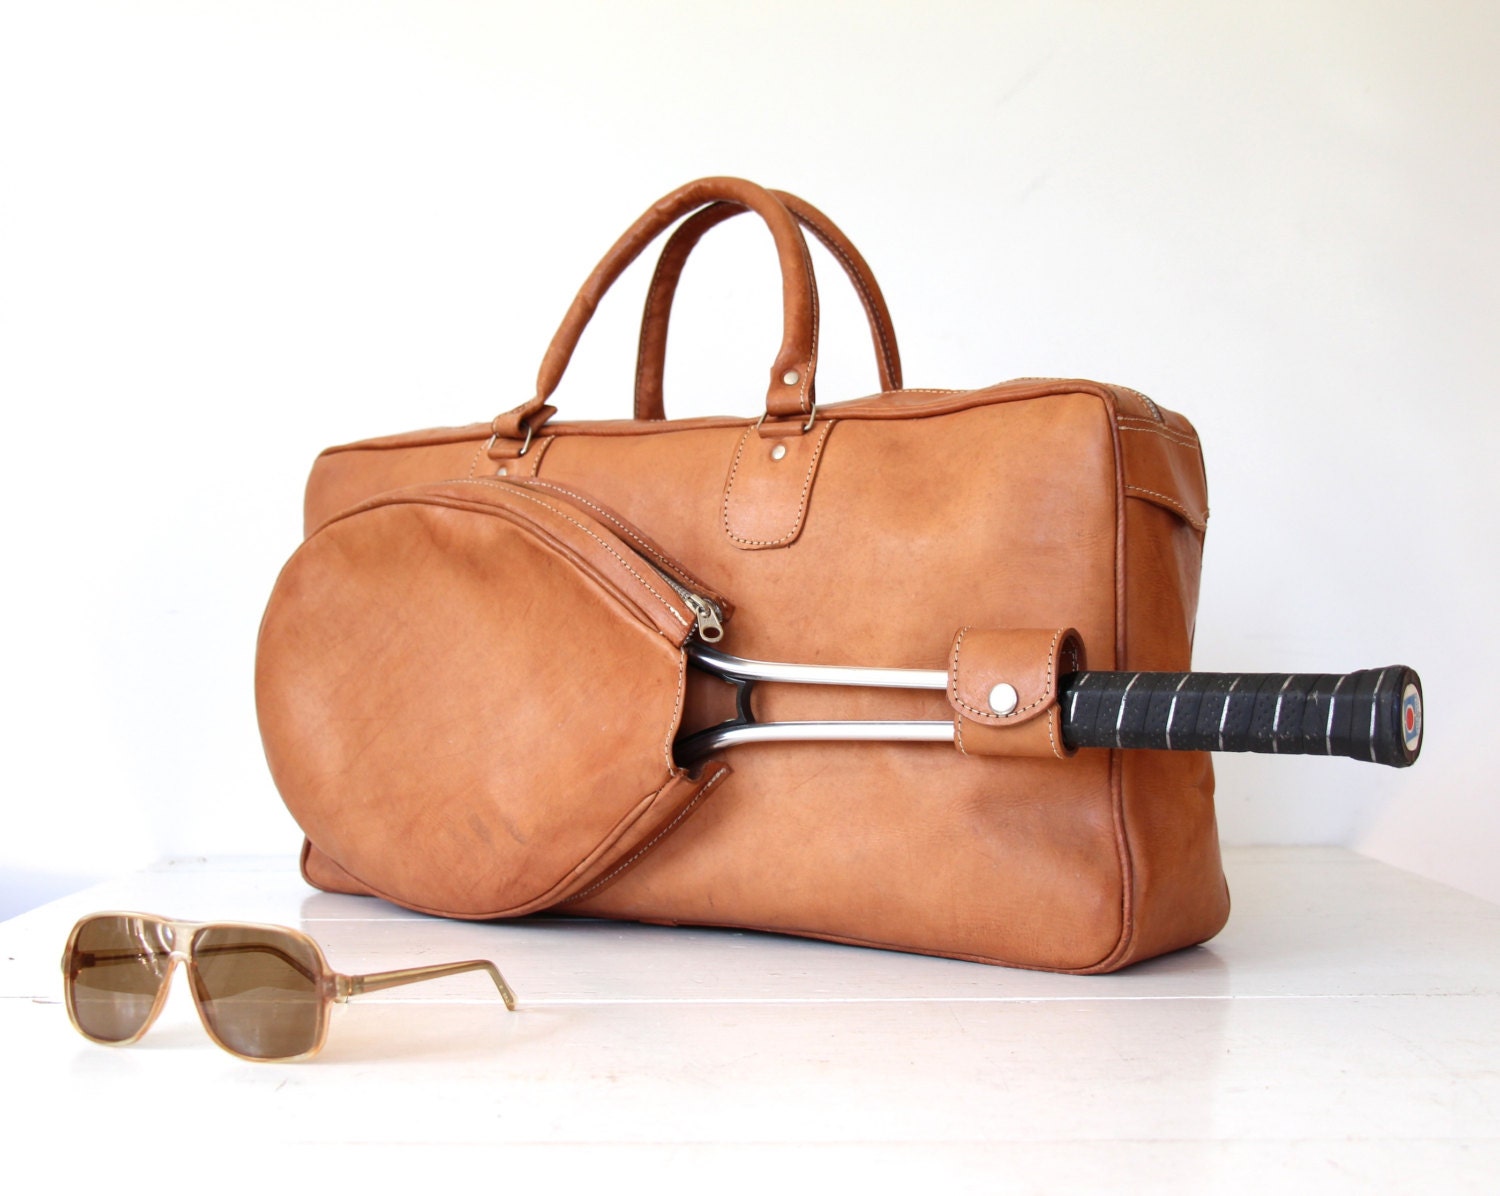 vintage leather duffle bag. Tennis bag. Natural cowhide